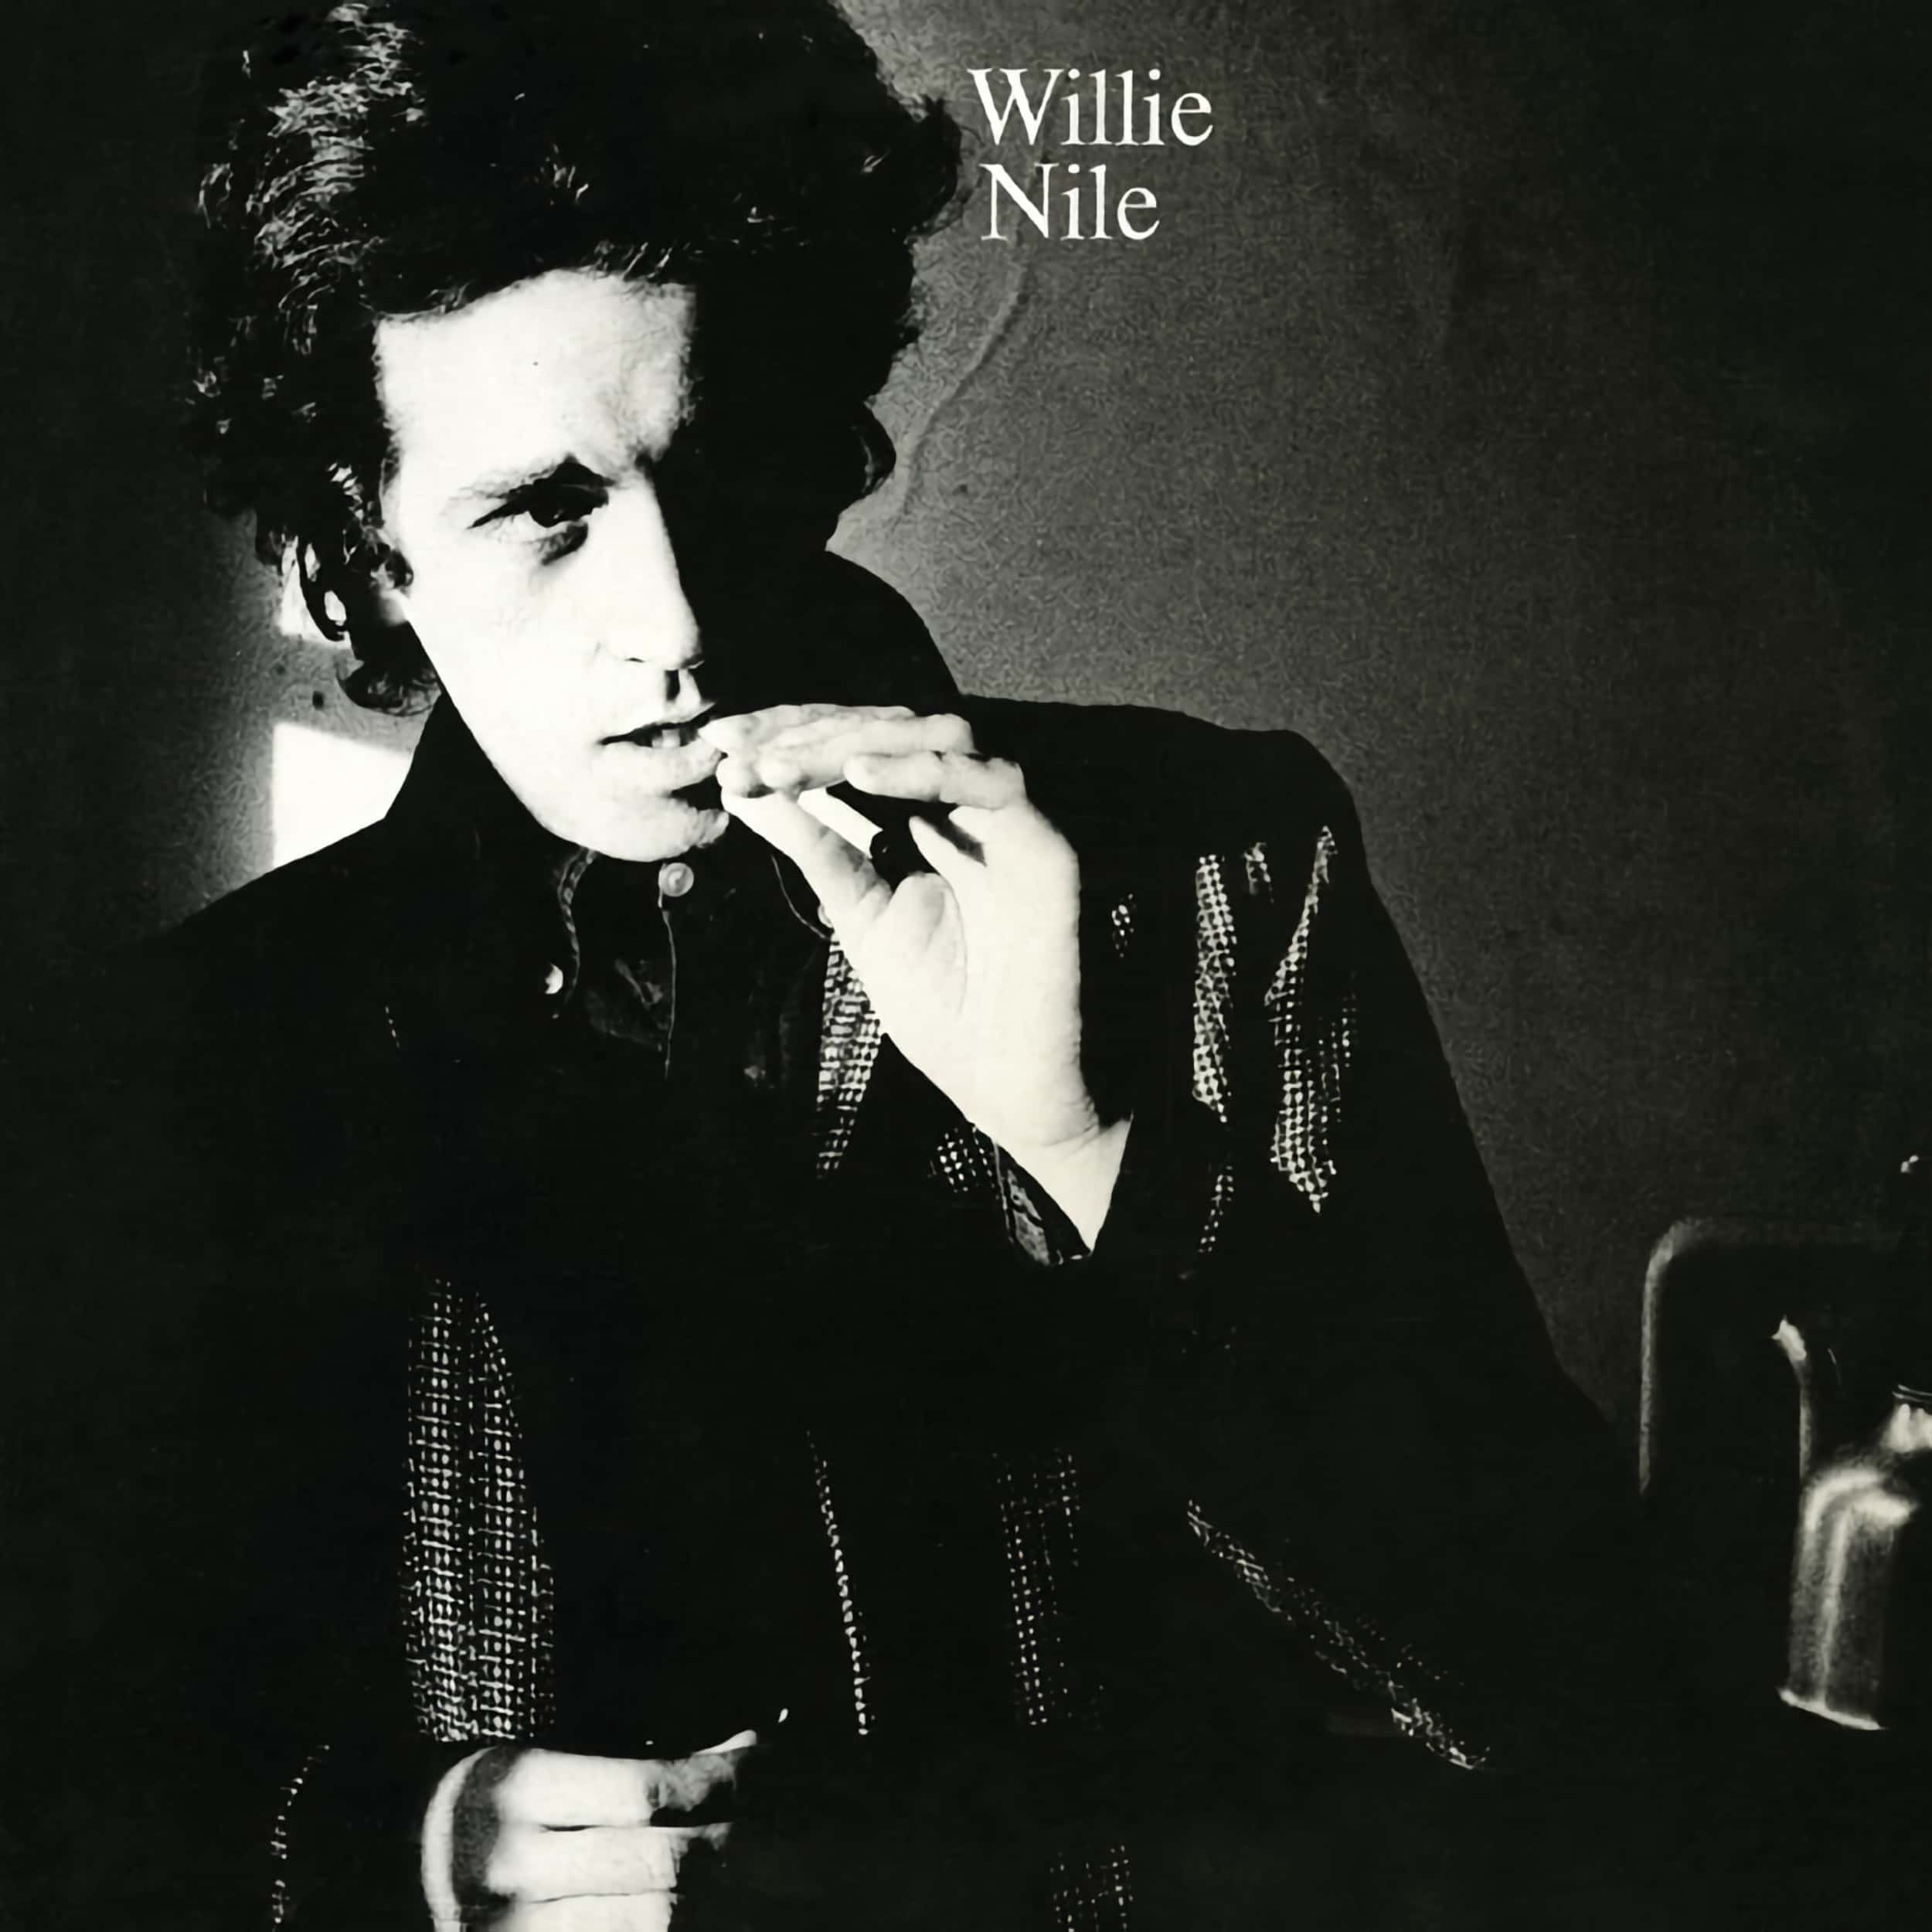 Willie Nile – Willie Nile